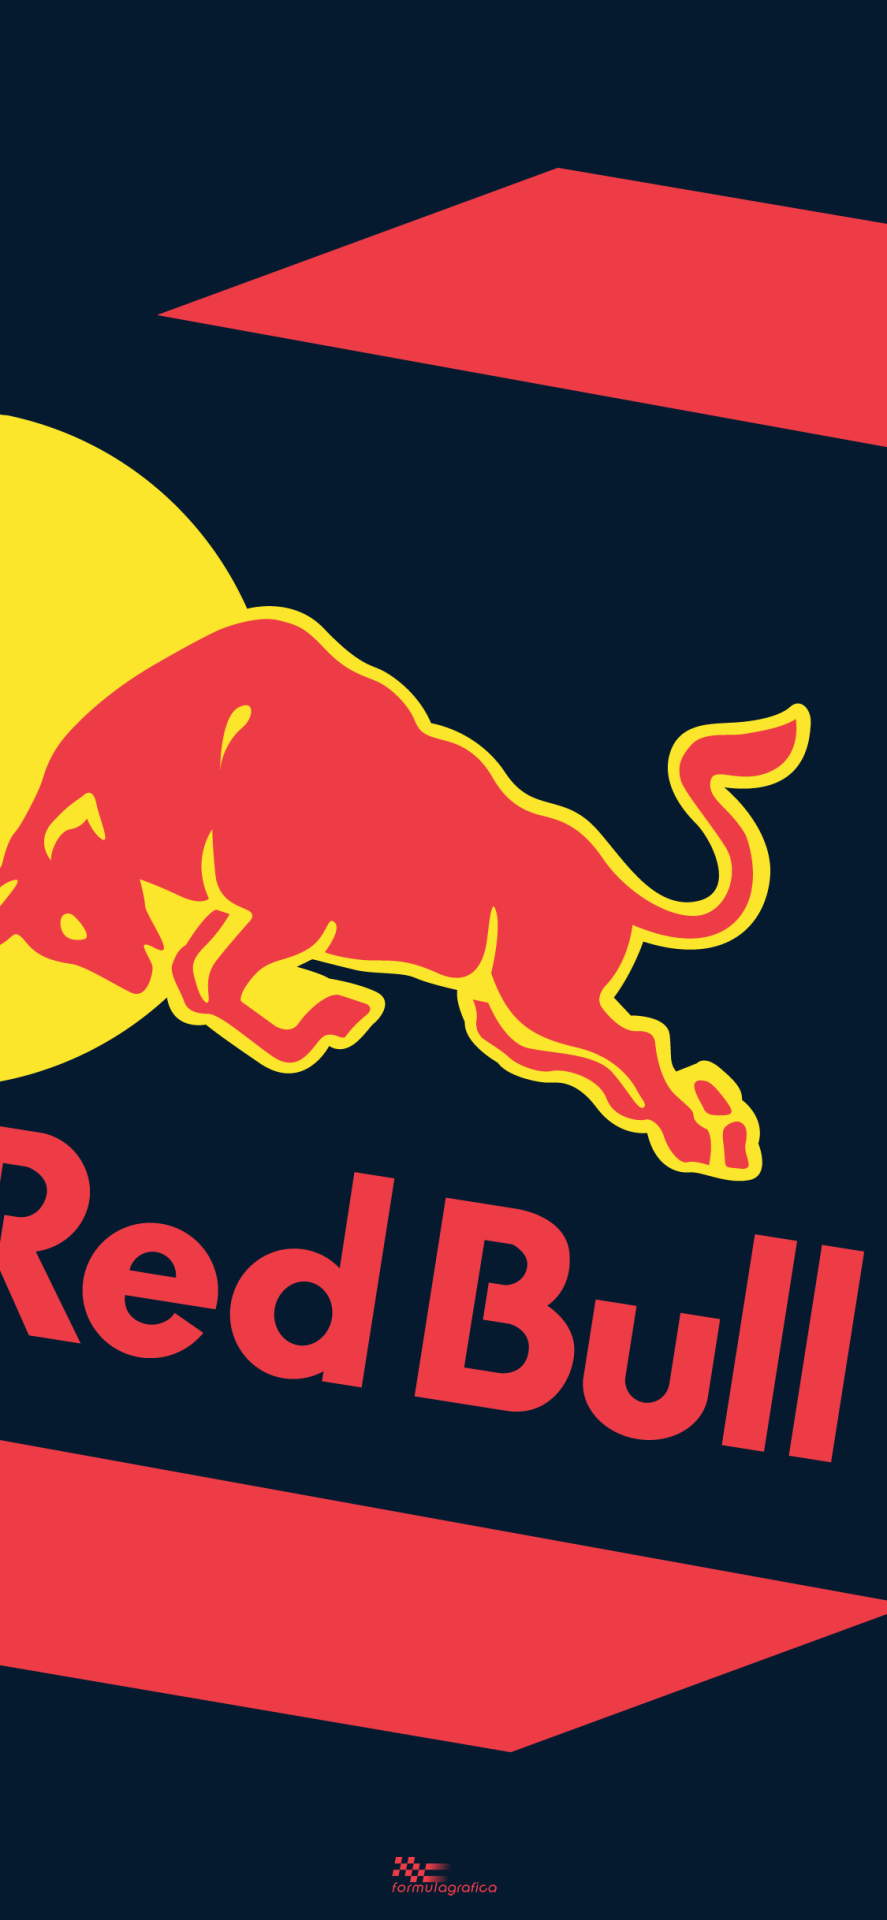 Red Bull Logo Hd Mobile Wallpapers Wallpaper Cave